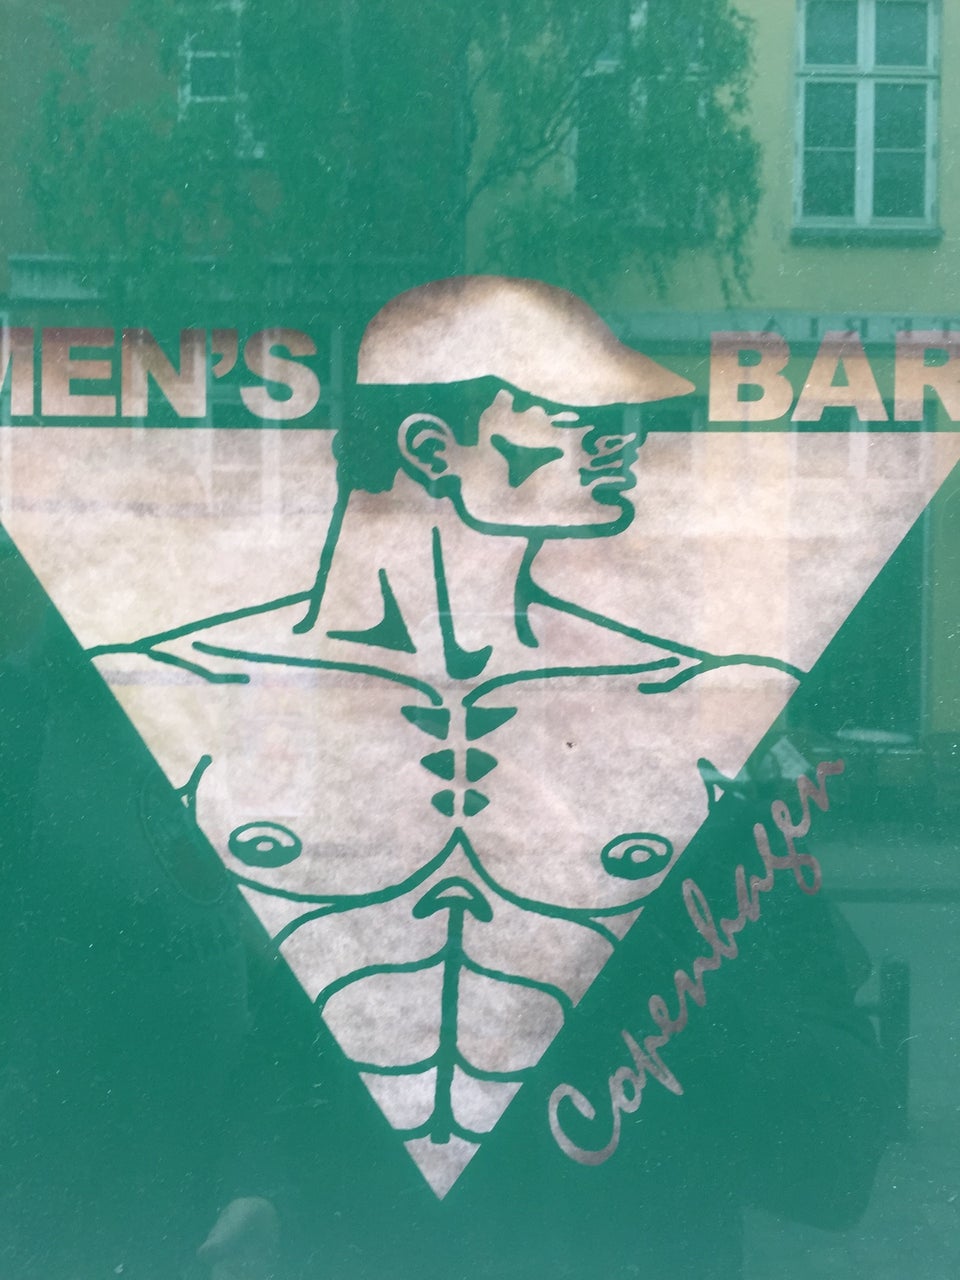 Photo of Men's Bar